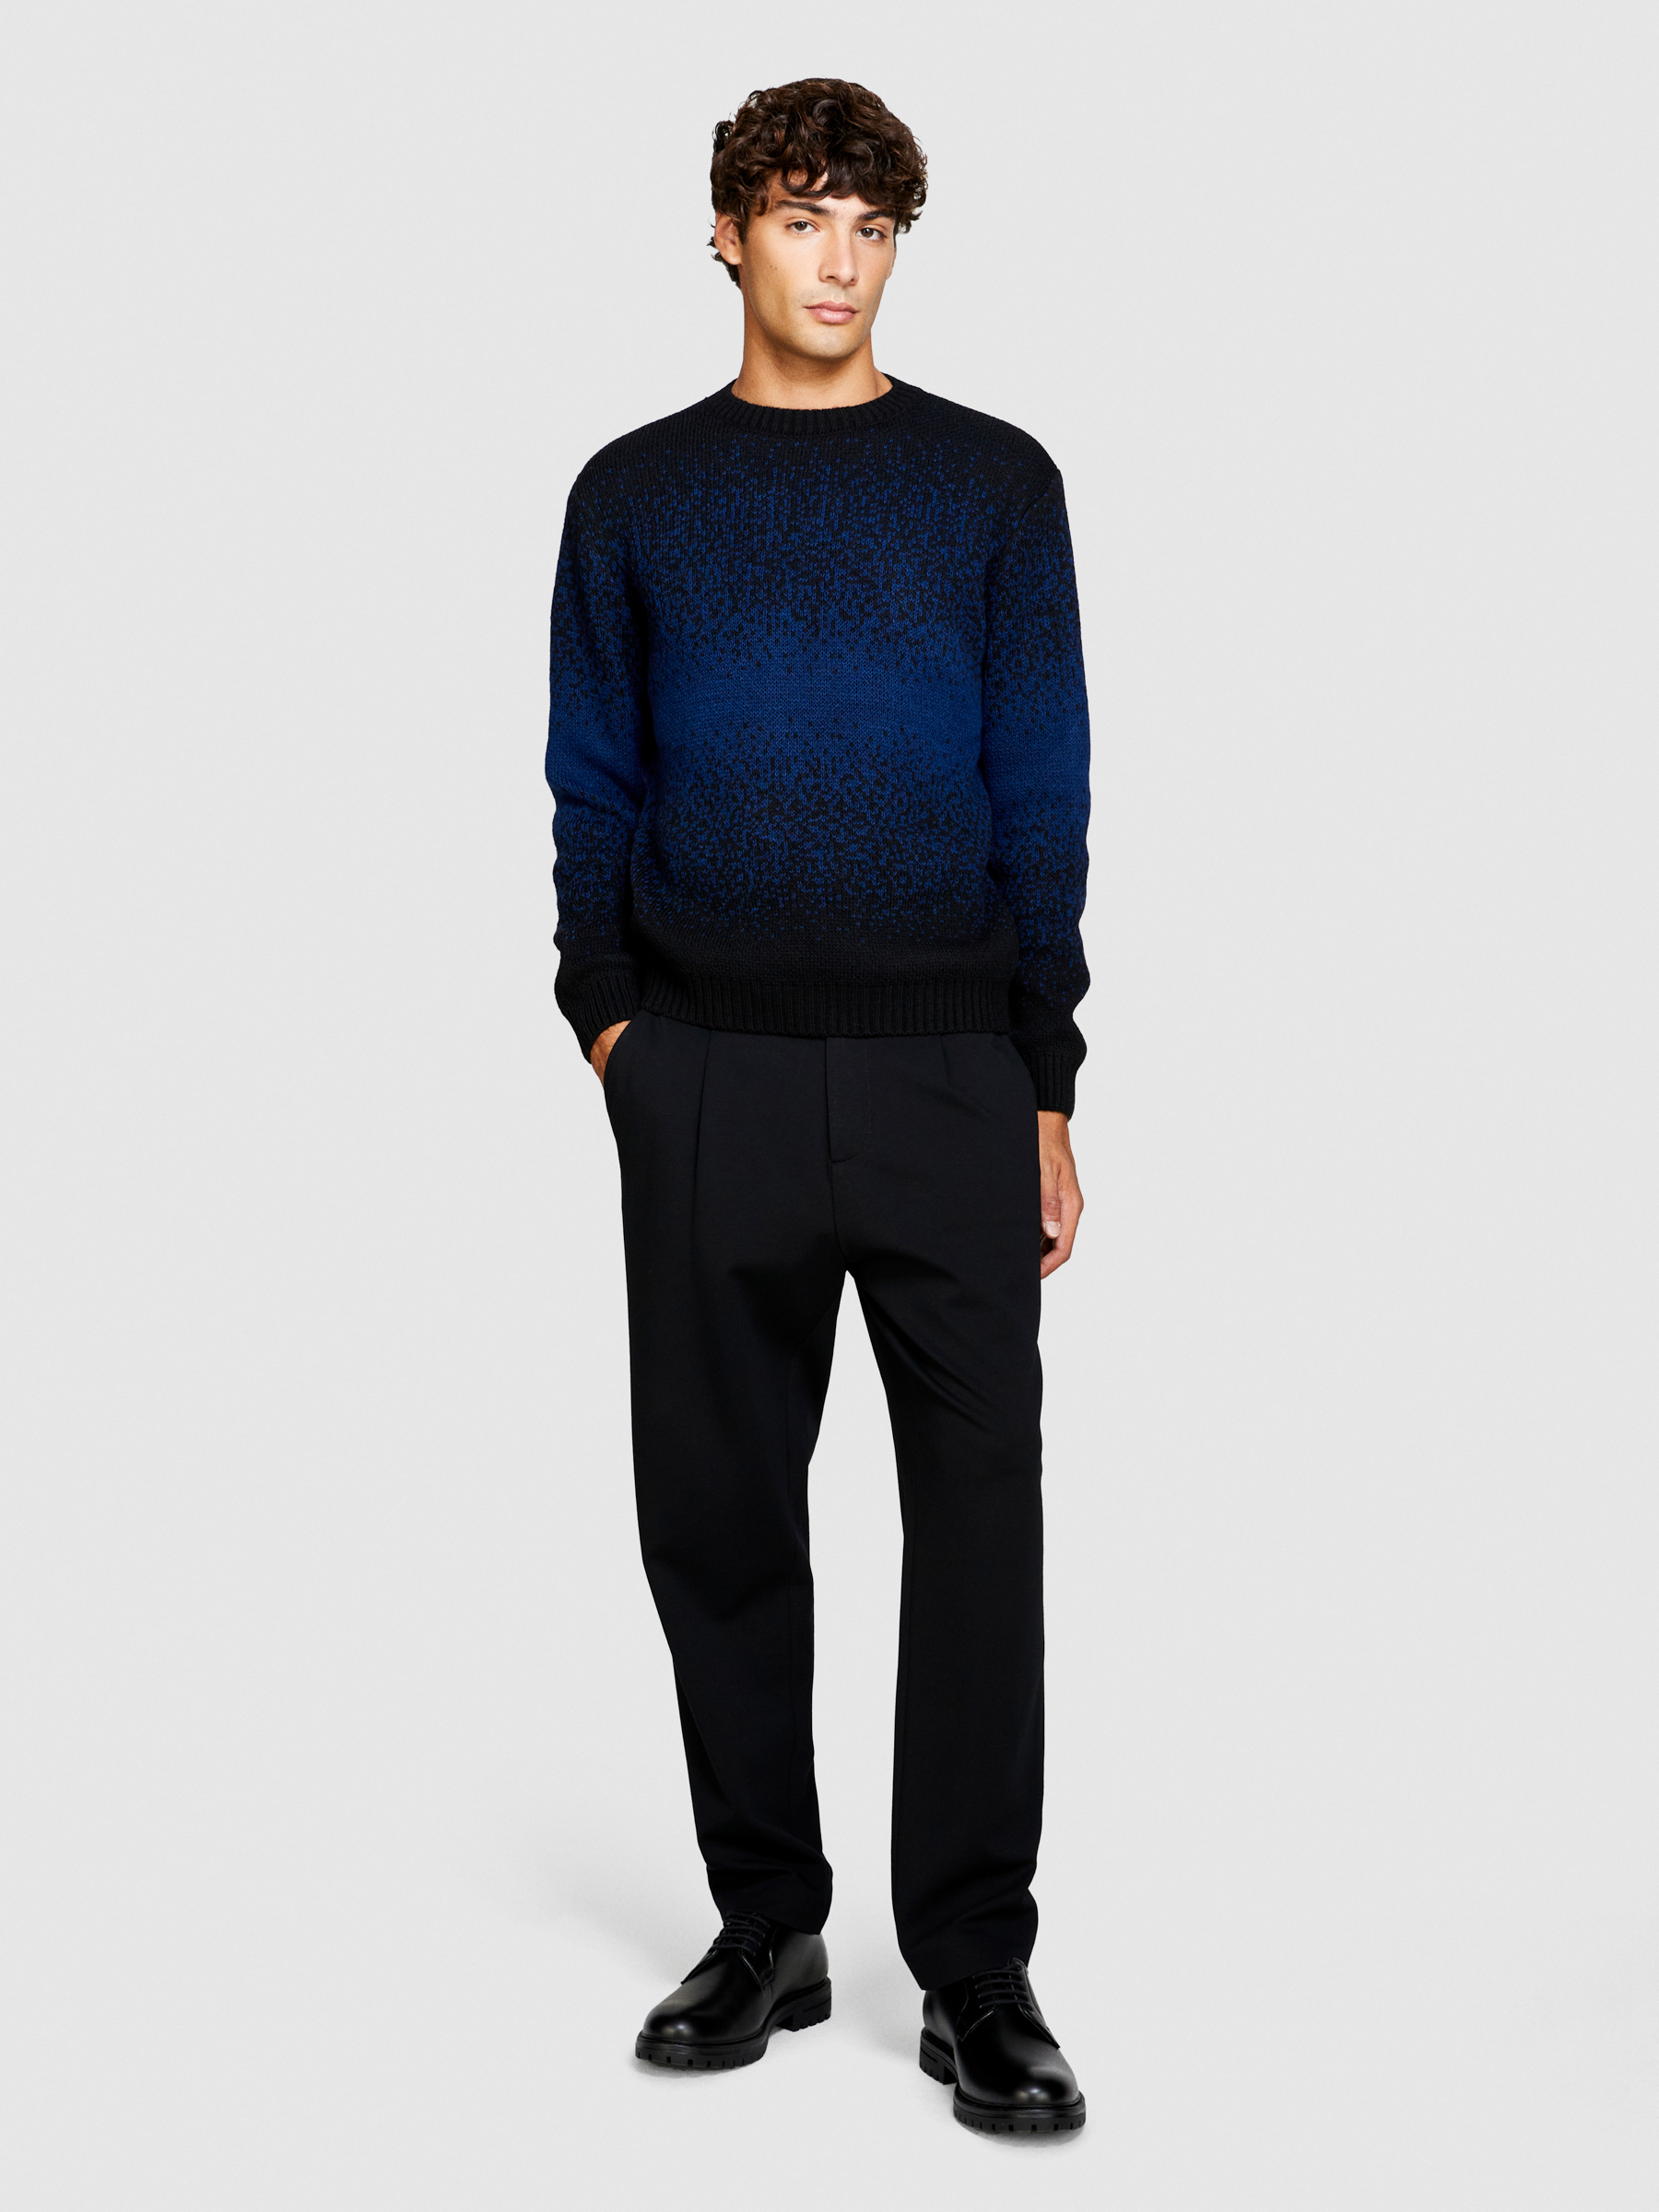 Sisley - Blurred Look Sweater, Man, Dark Blue, Size: S